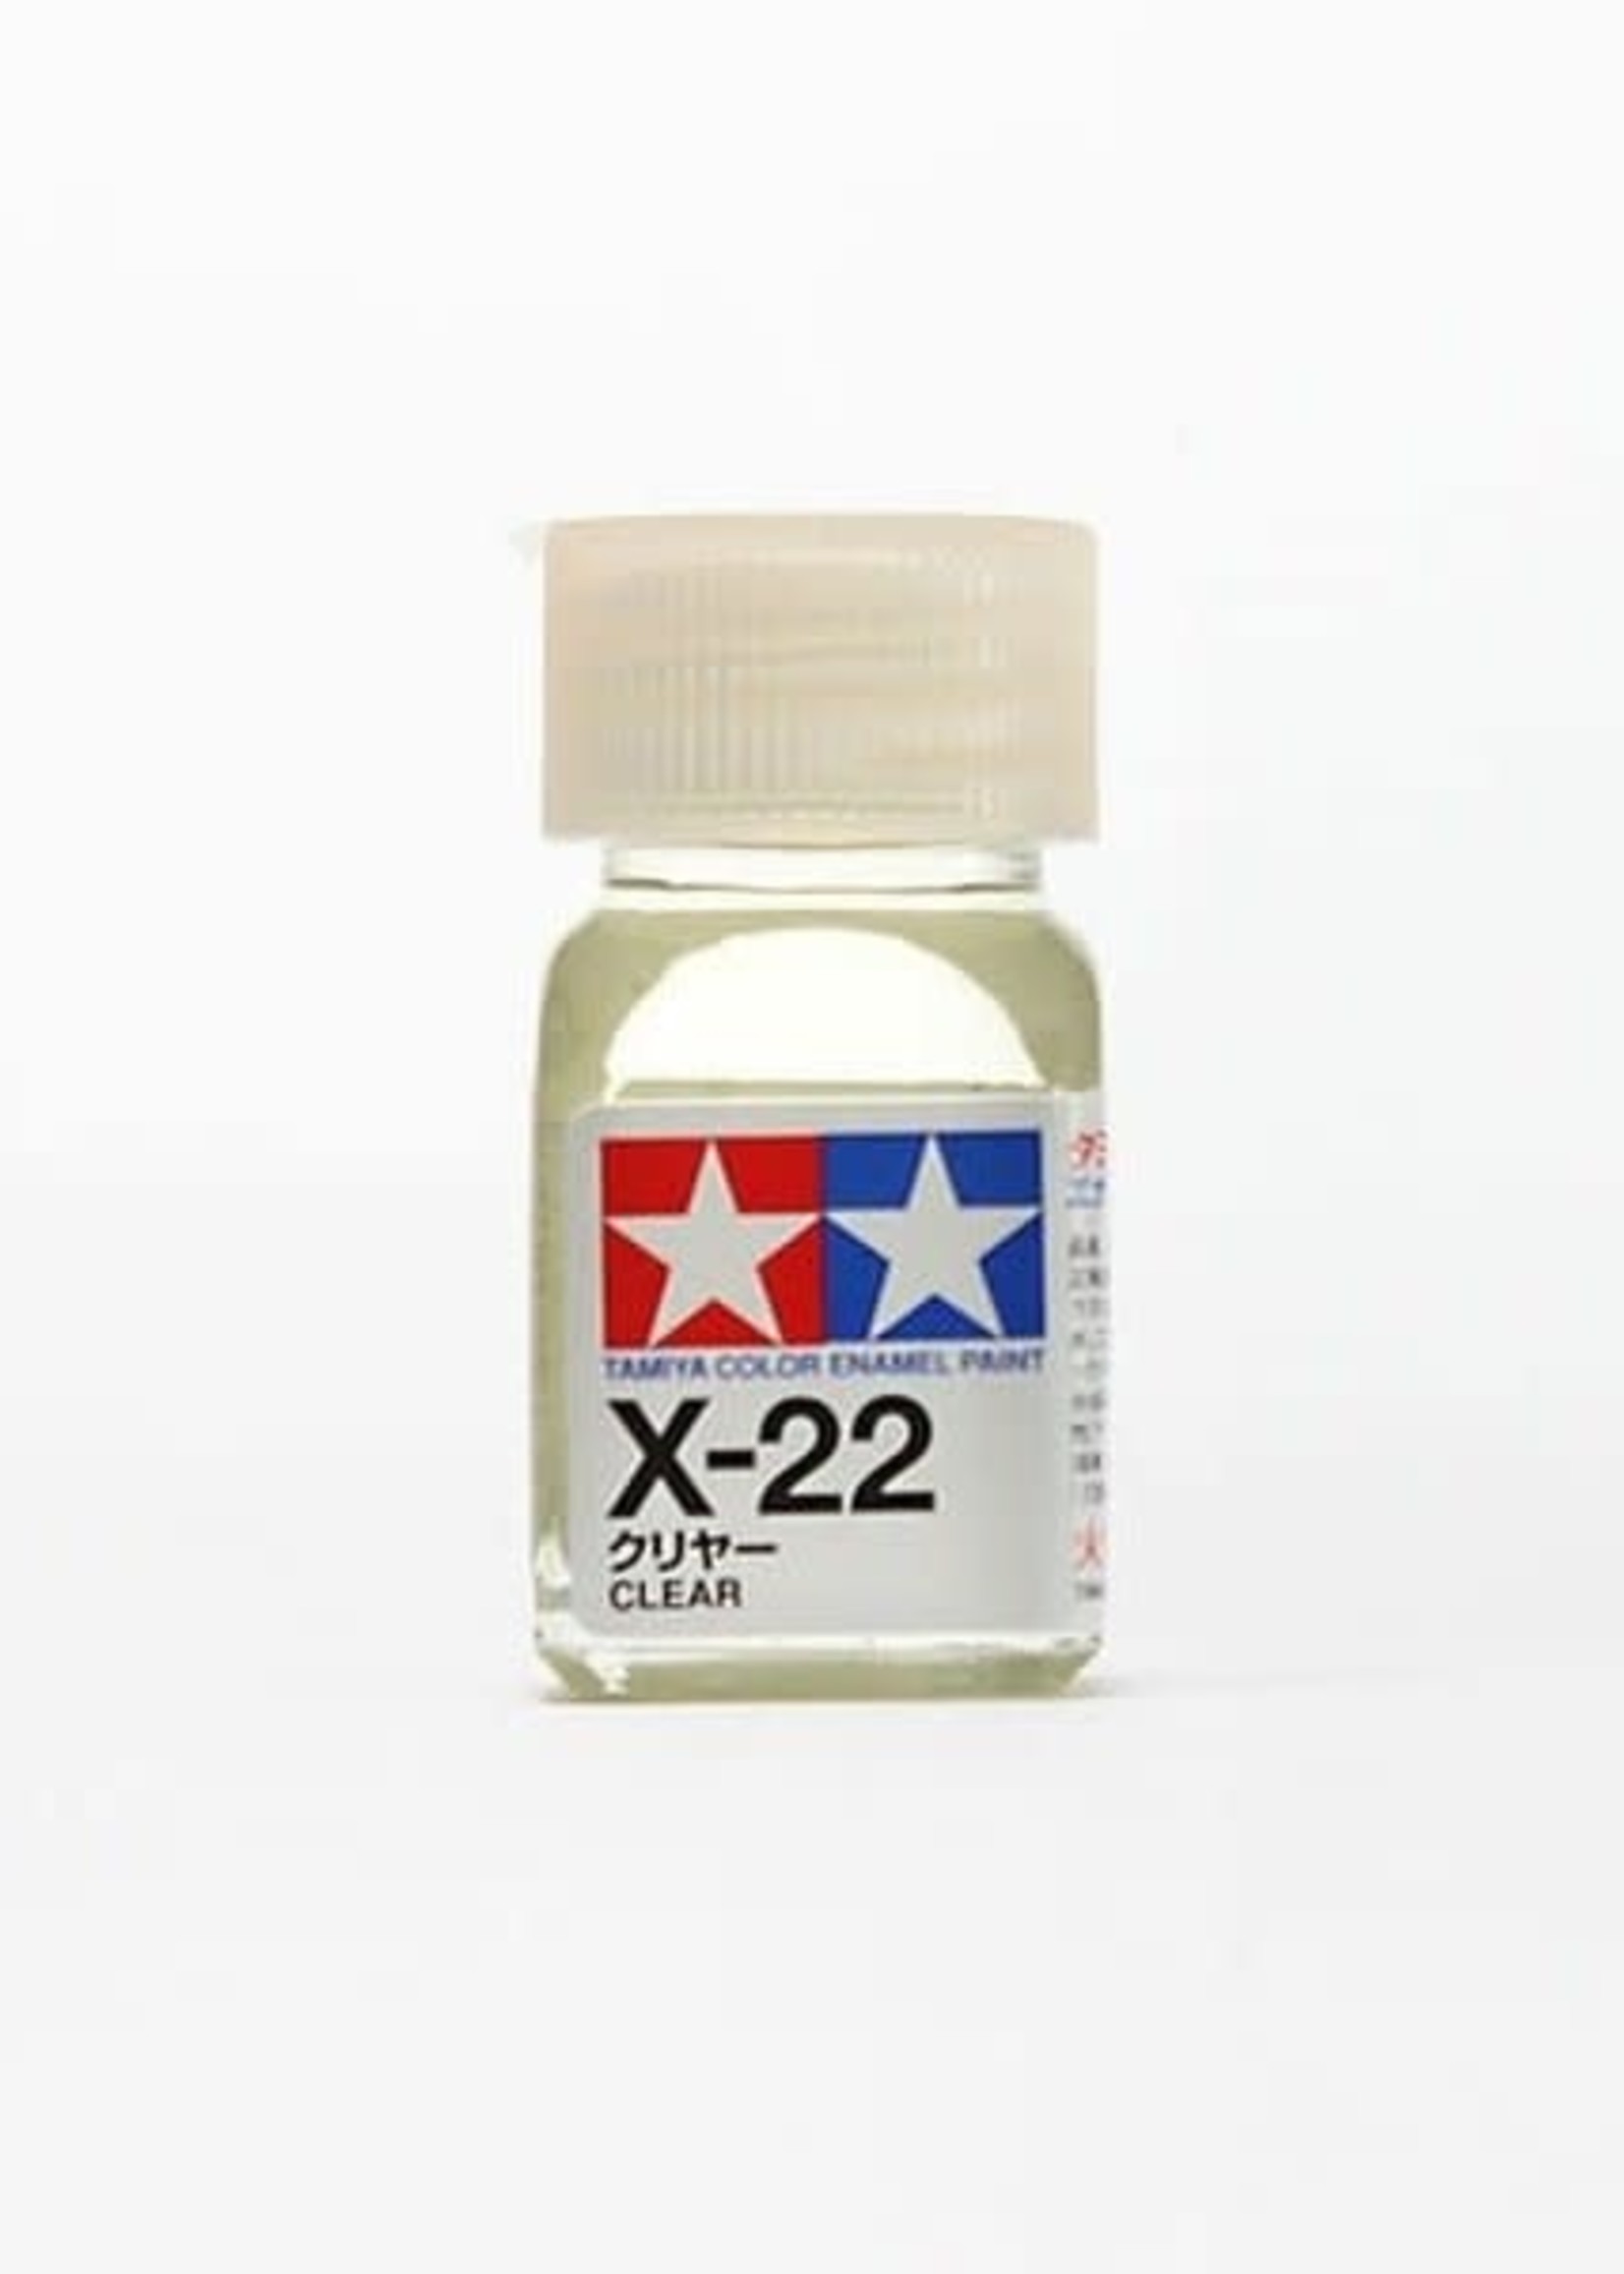 Tamiya Tamiya color enamel paint - X-22 - Clear